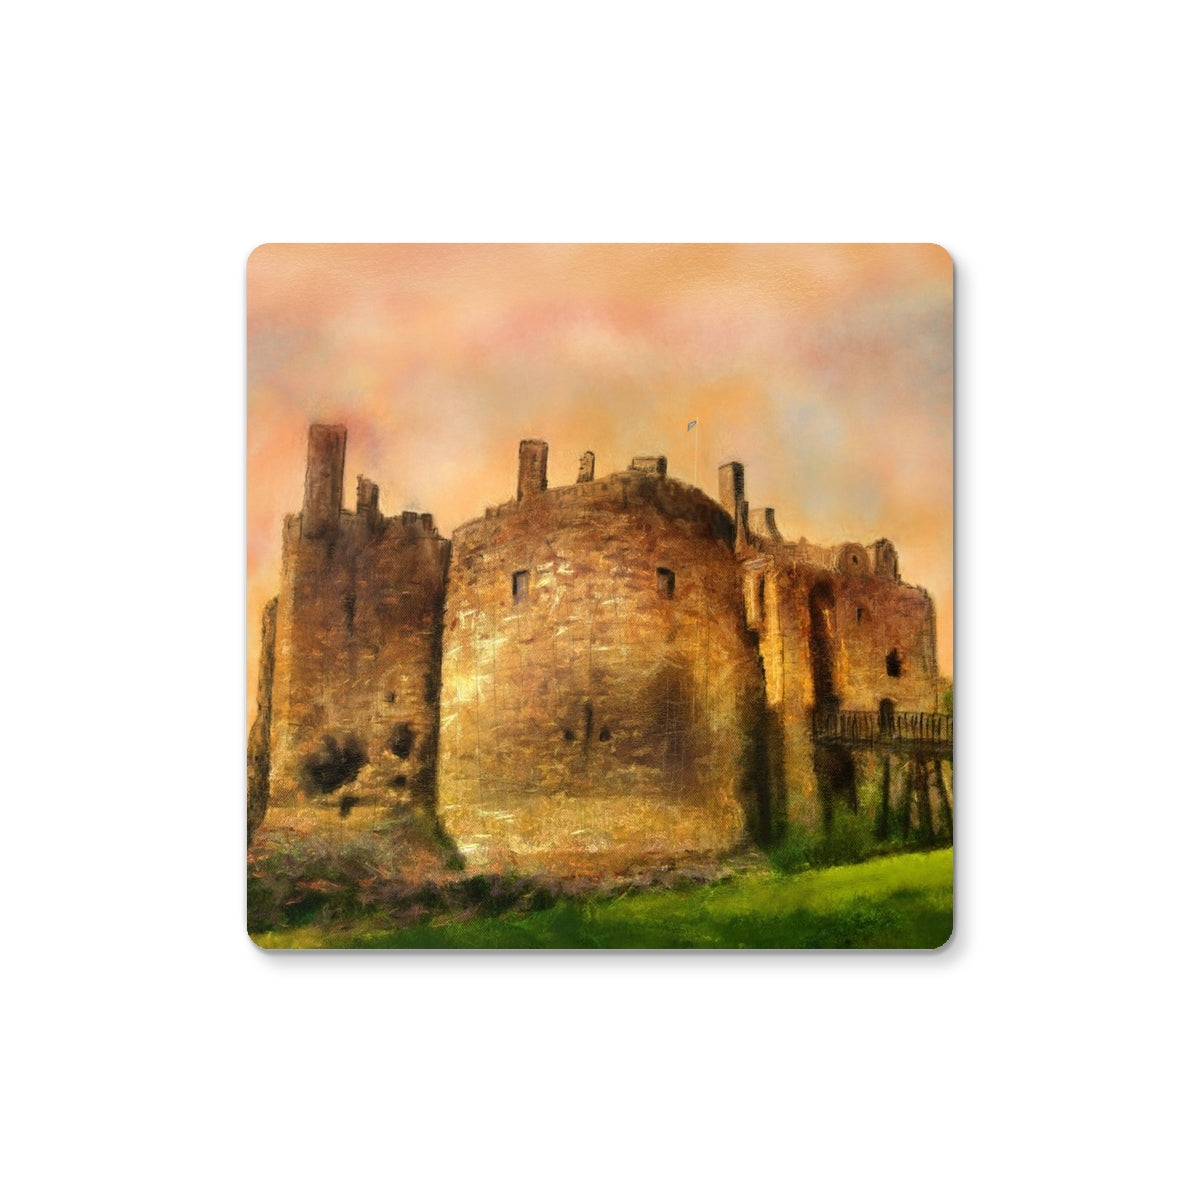 Dirleton Castle Art Gifts Coaster-Homeware-Prodigi-4 Coasters-Paintings, Prints, Homeware, Art Gifts From Scotland By Scottish Artist Kevin Hunter